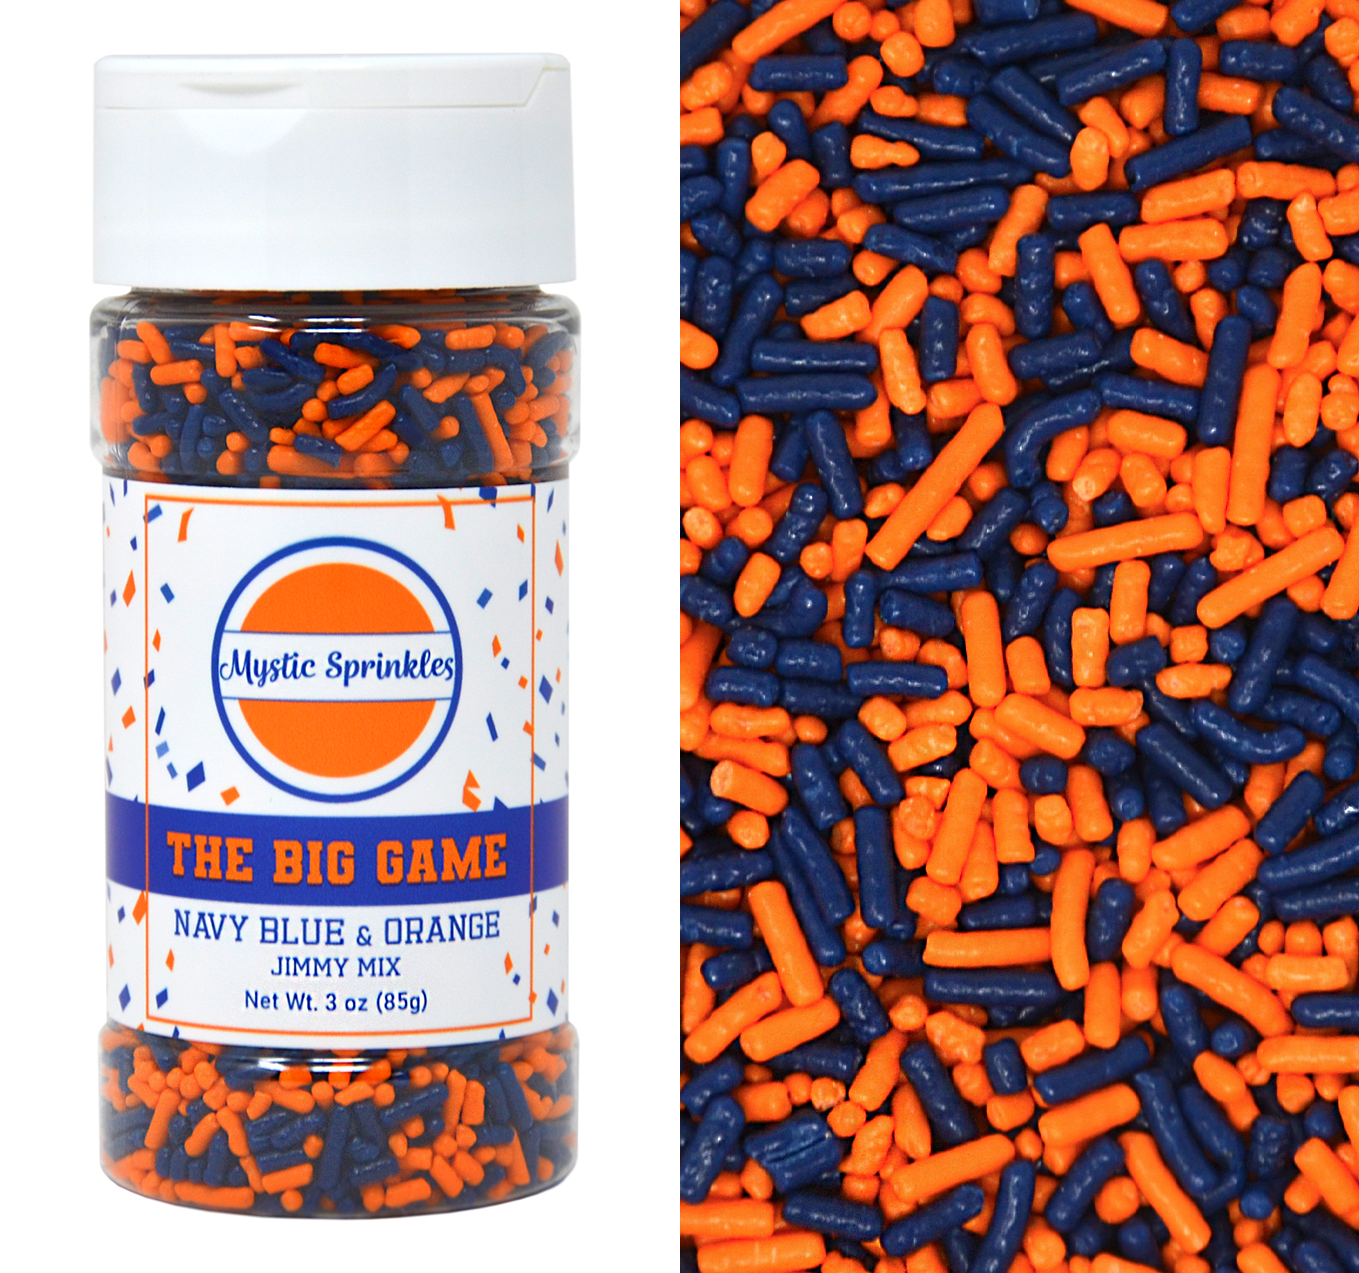 The Big Game: Navy Blue & Orange Jimmy Mix 3oz Bottle